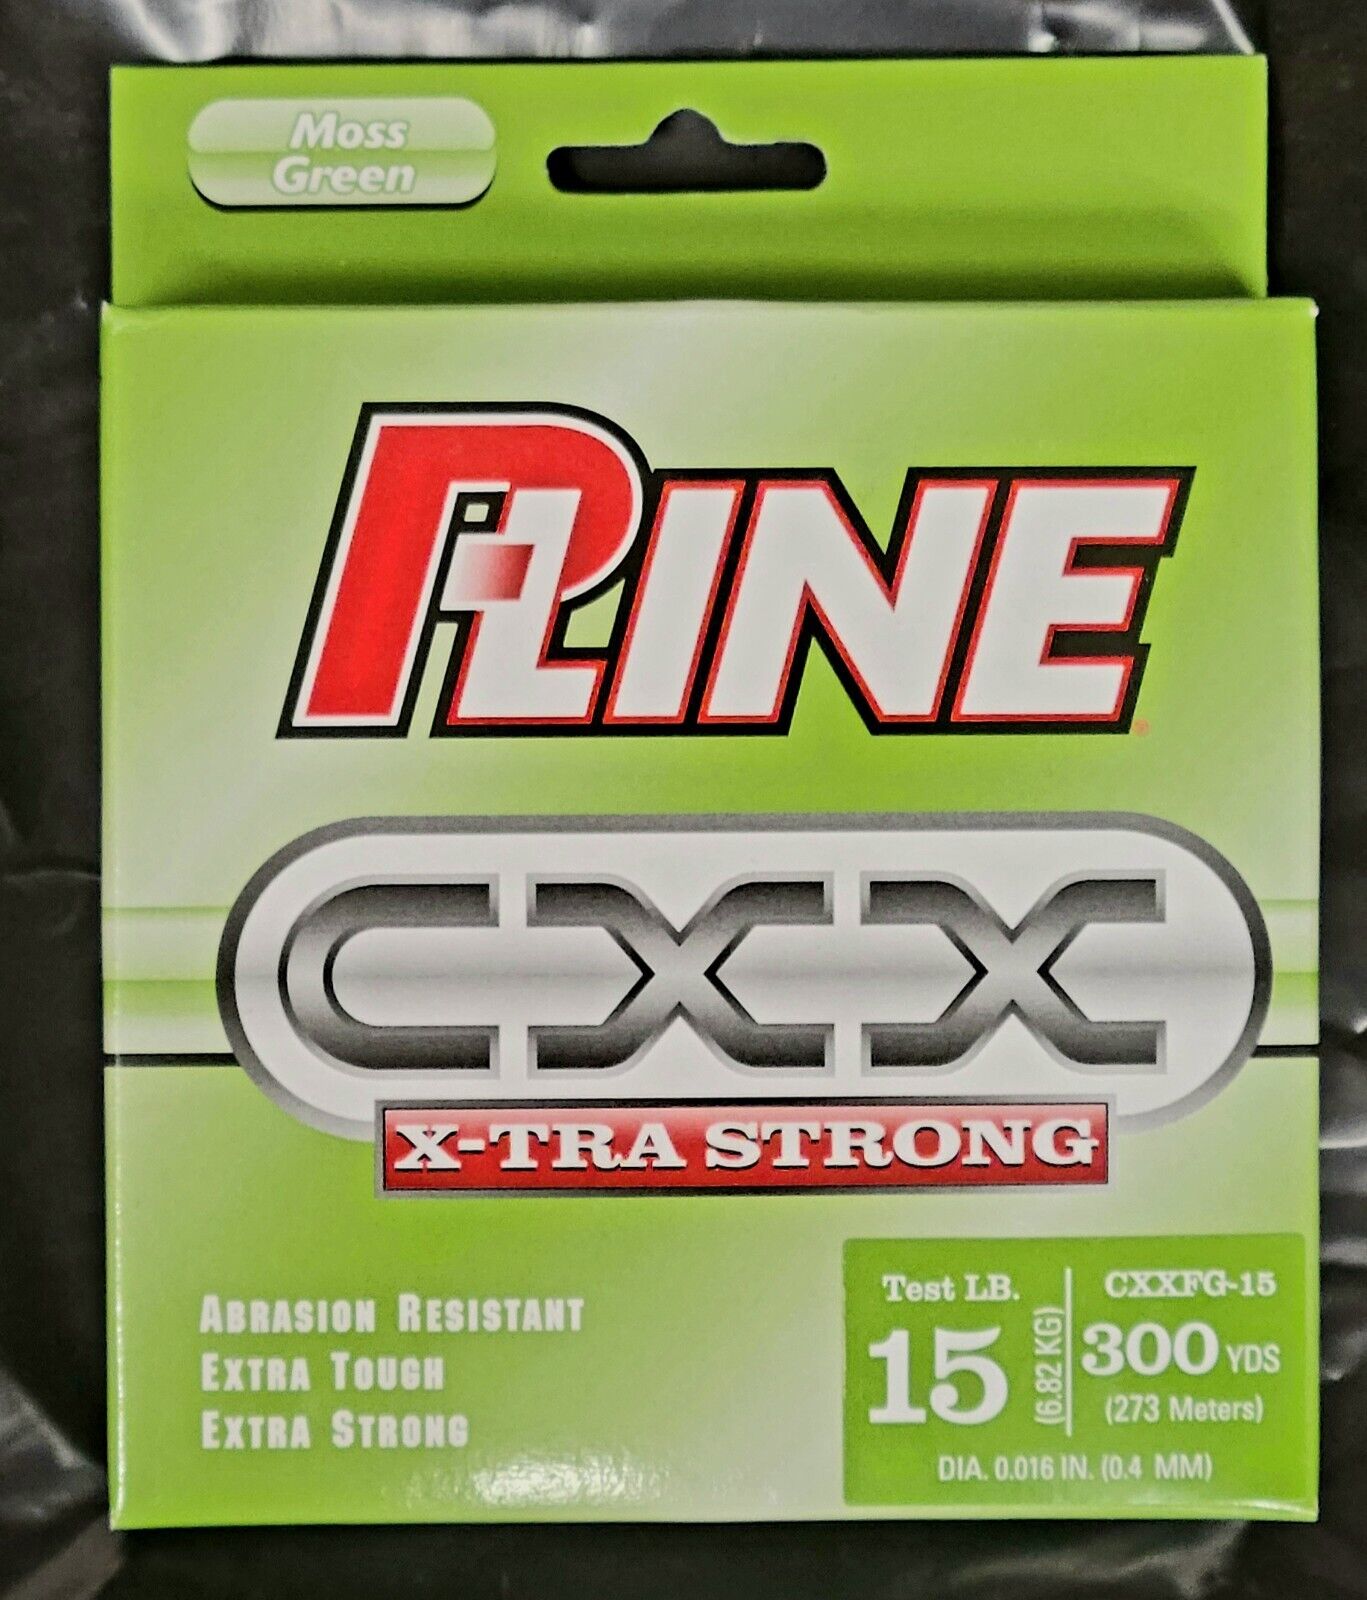 P-LINE CXX   X-TRA STRONG COPOLYMER FISHING LINE   300YDS   MOSS GREEN